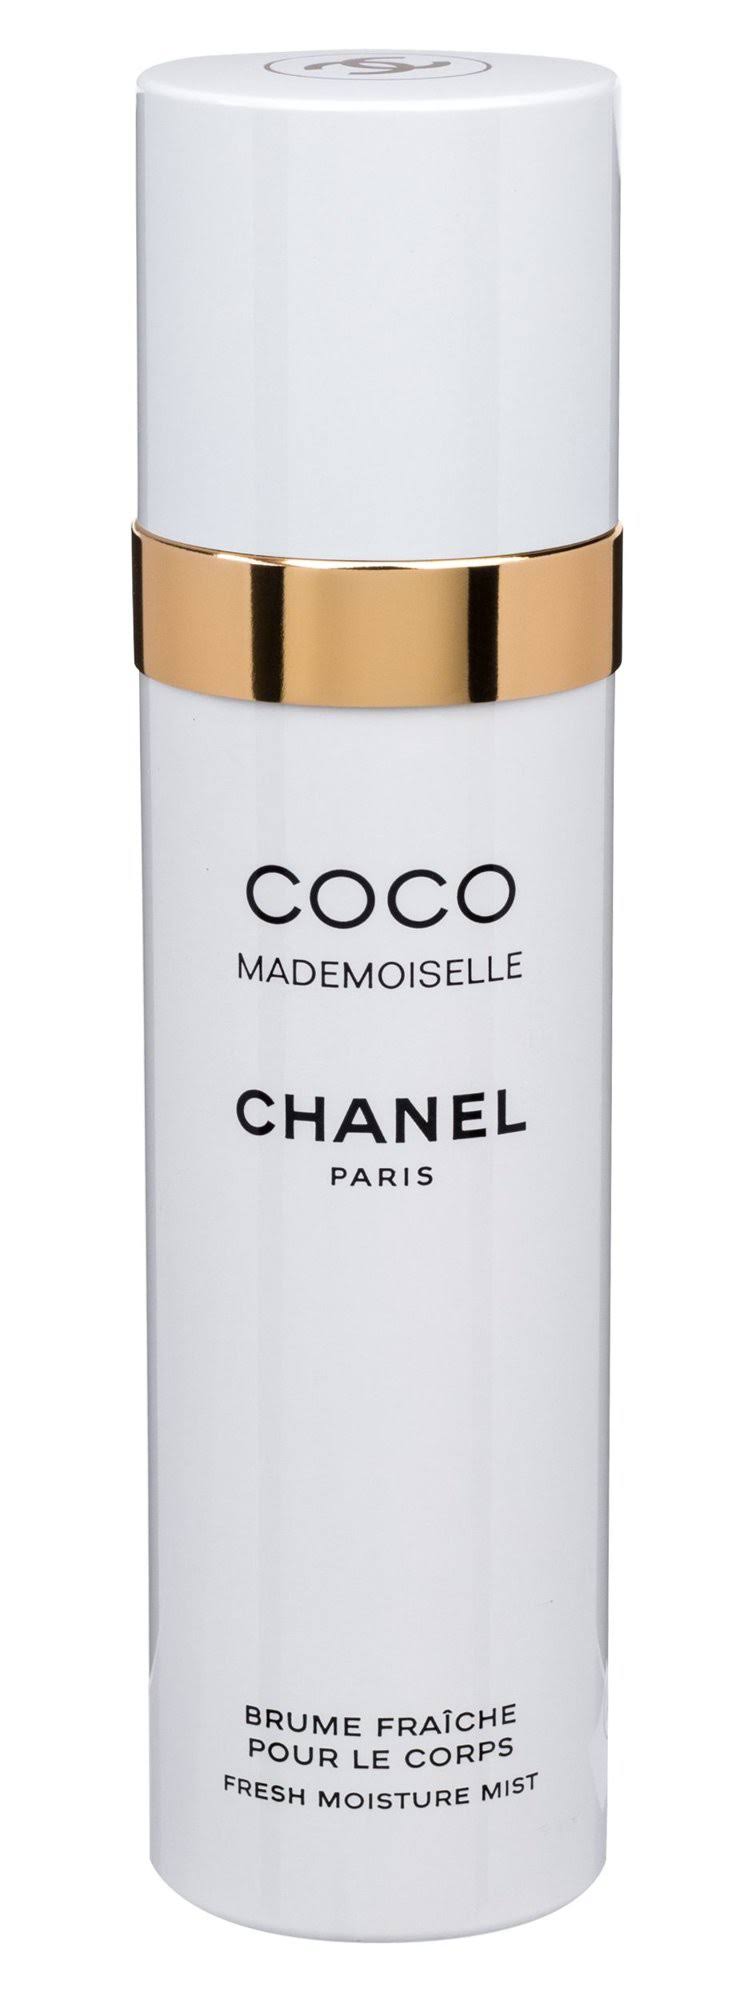 Chanel Coco Mademoiselle Moisture Mist - 100ml